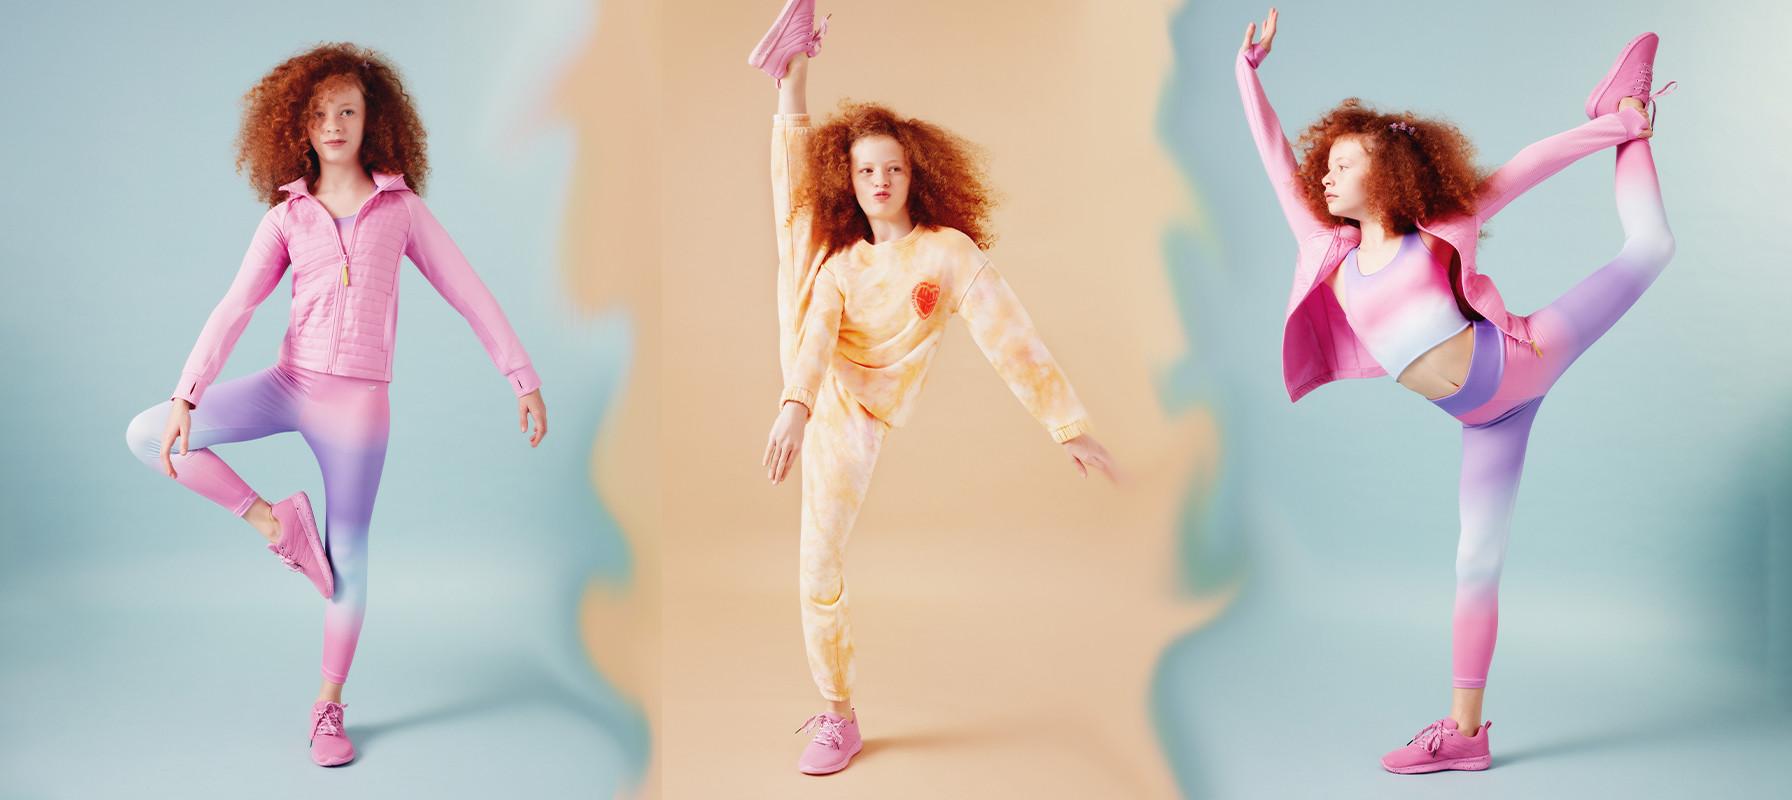 Model wears pastel coloured activewear